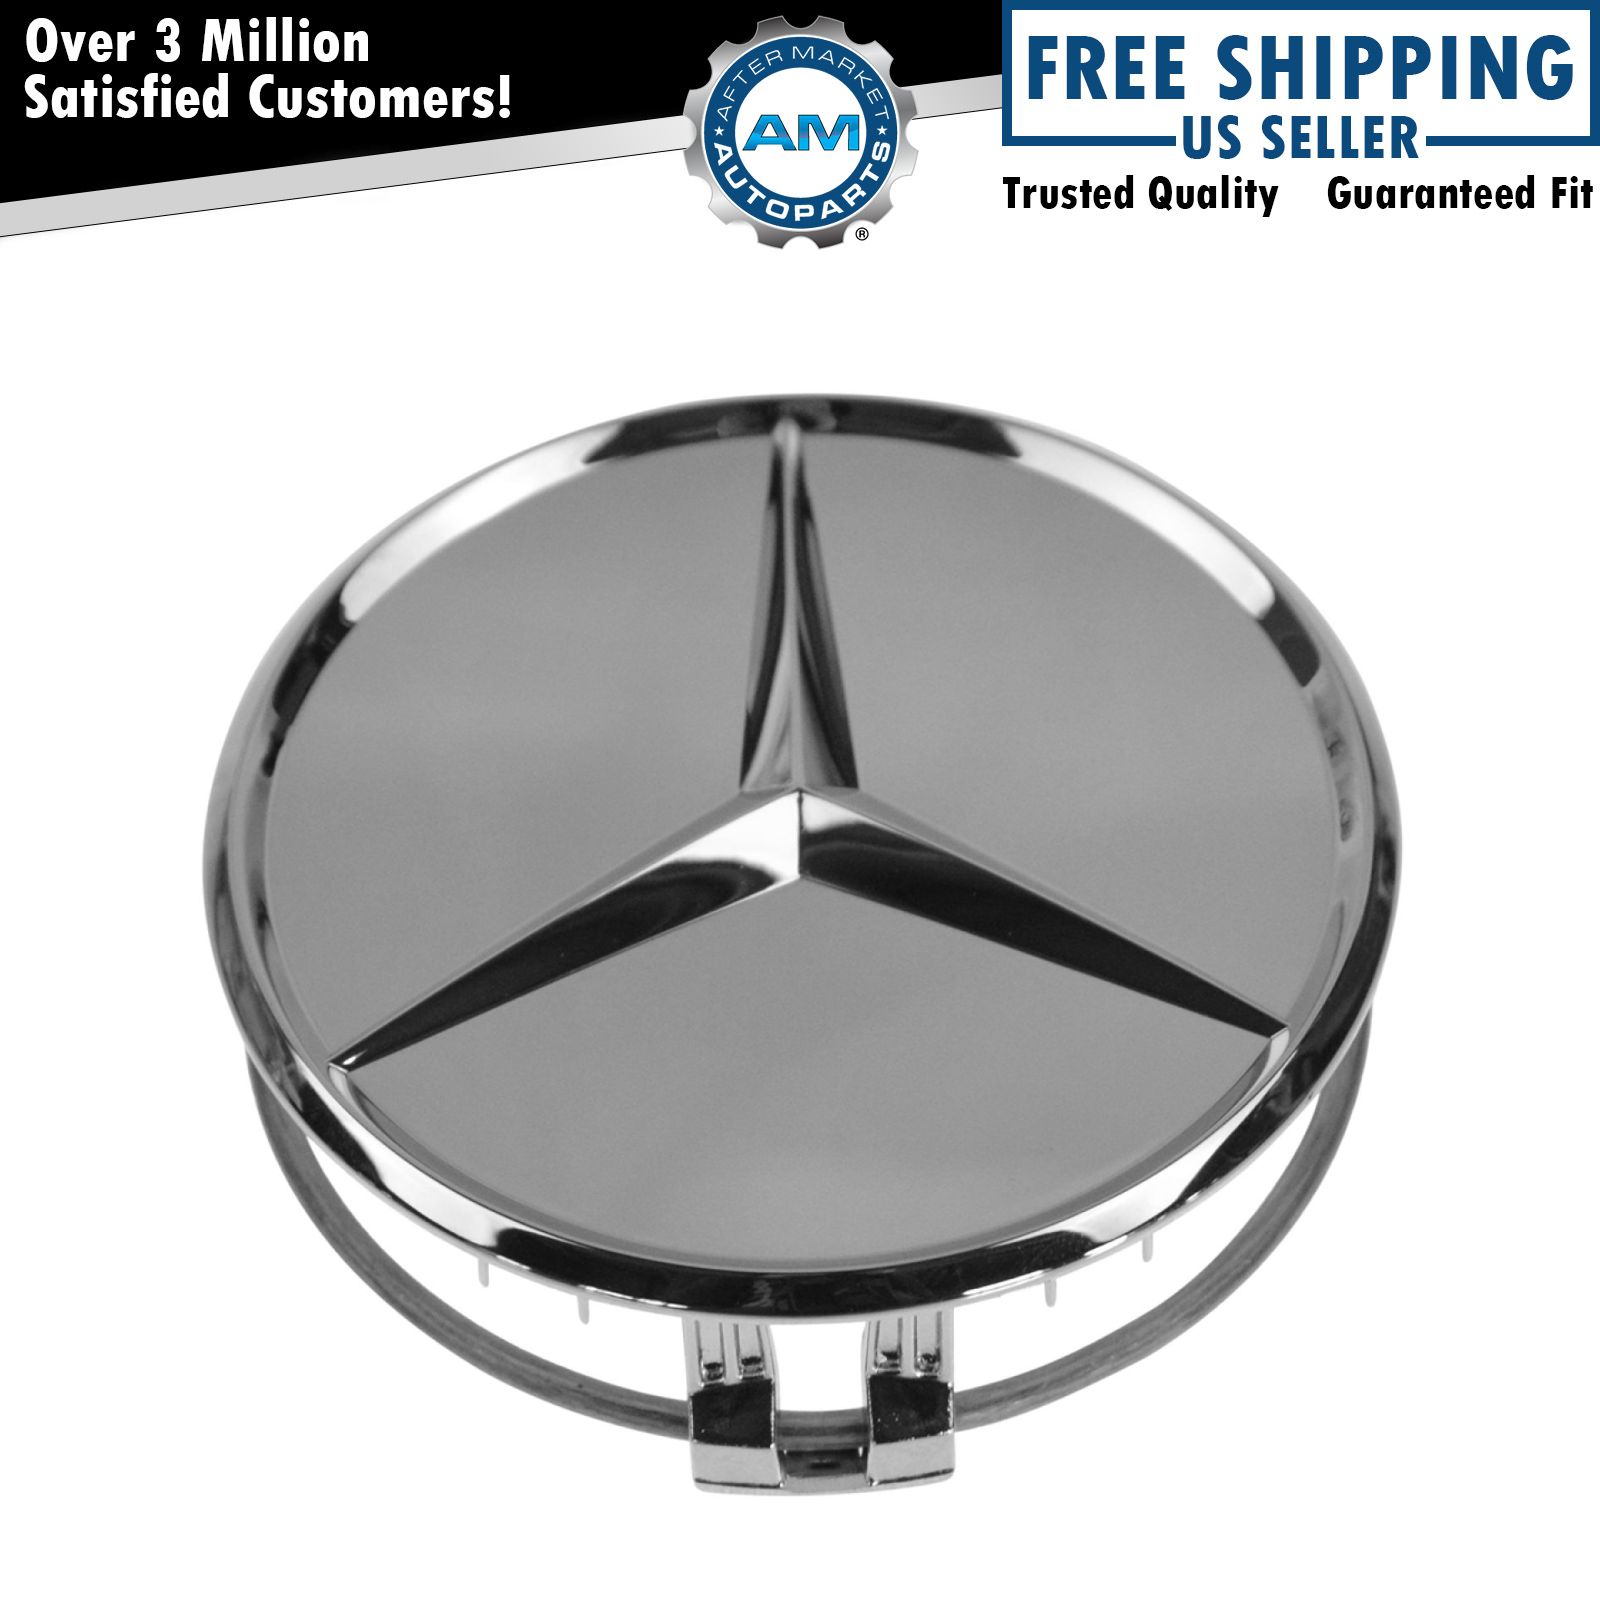 OEM Wheel Center Cap & Raised Star Chrome LH RH Front Rear for Mercedes Benz